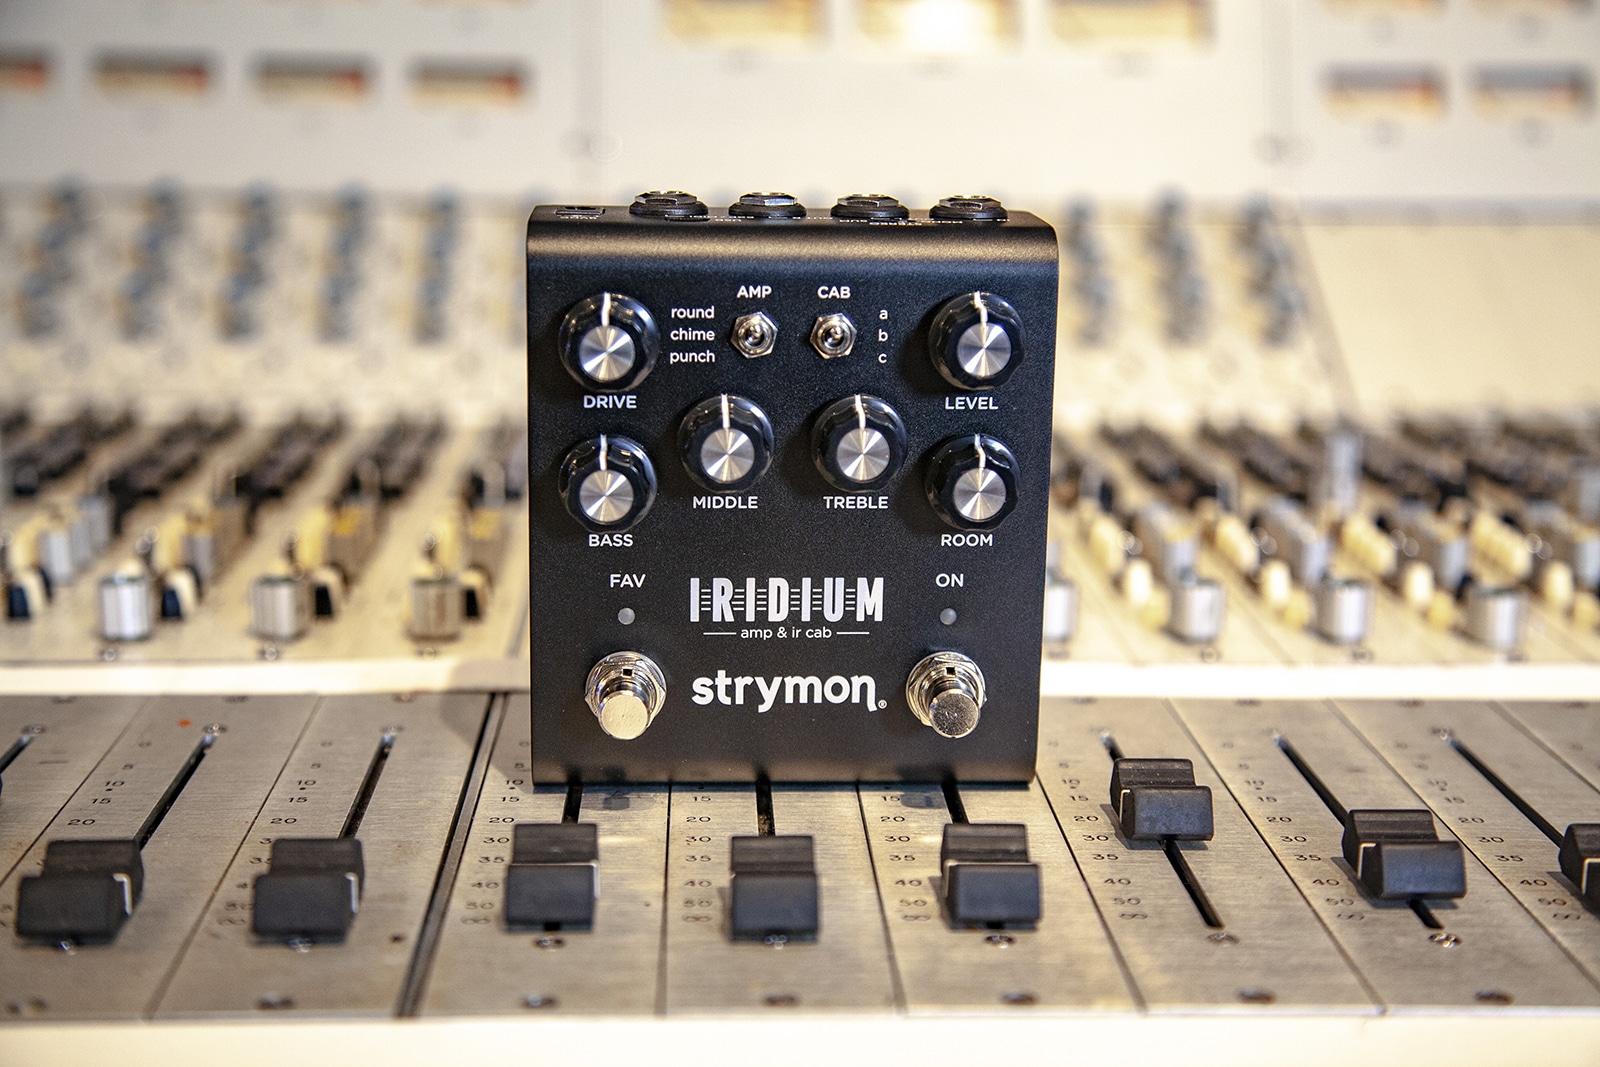 Iridium - Amp Modeler & Impulse Response Cabinet - Strymon